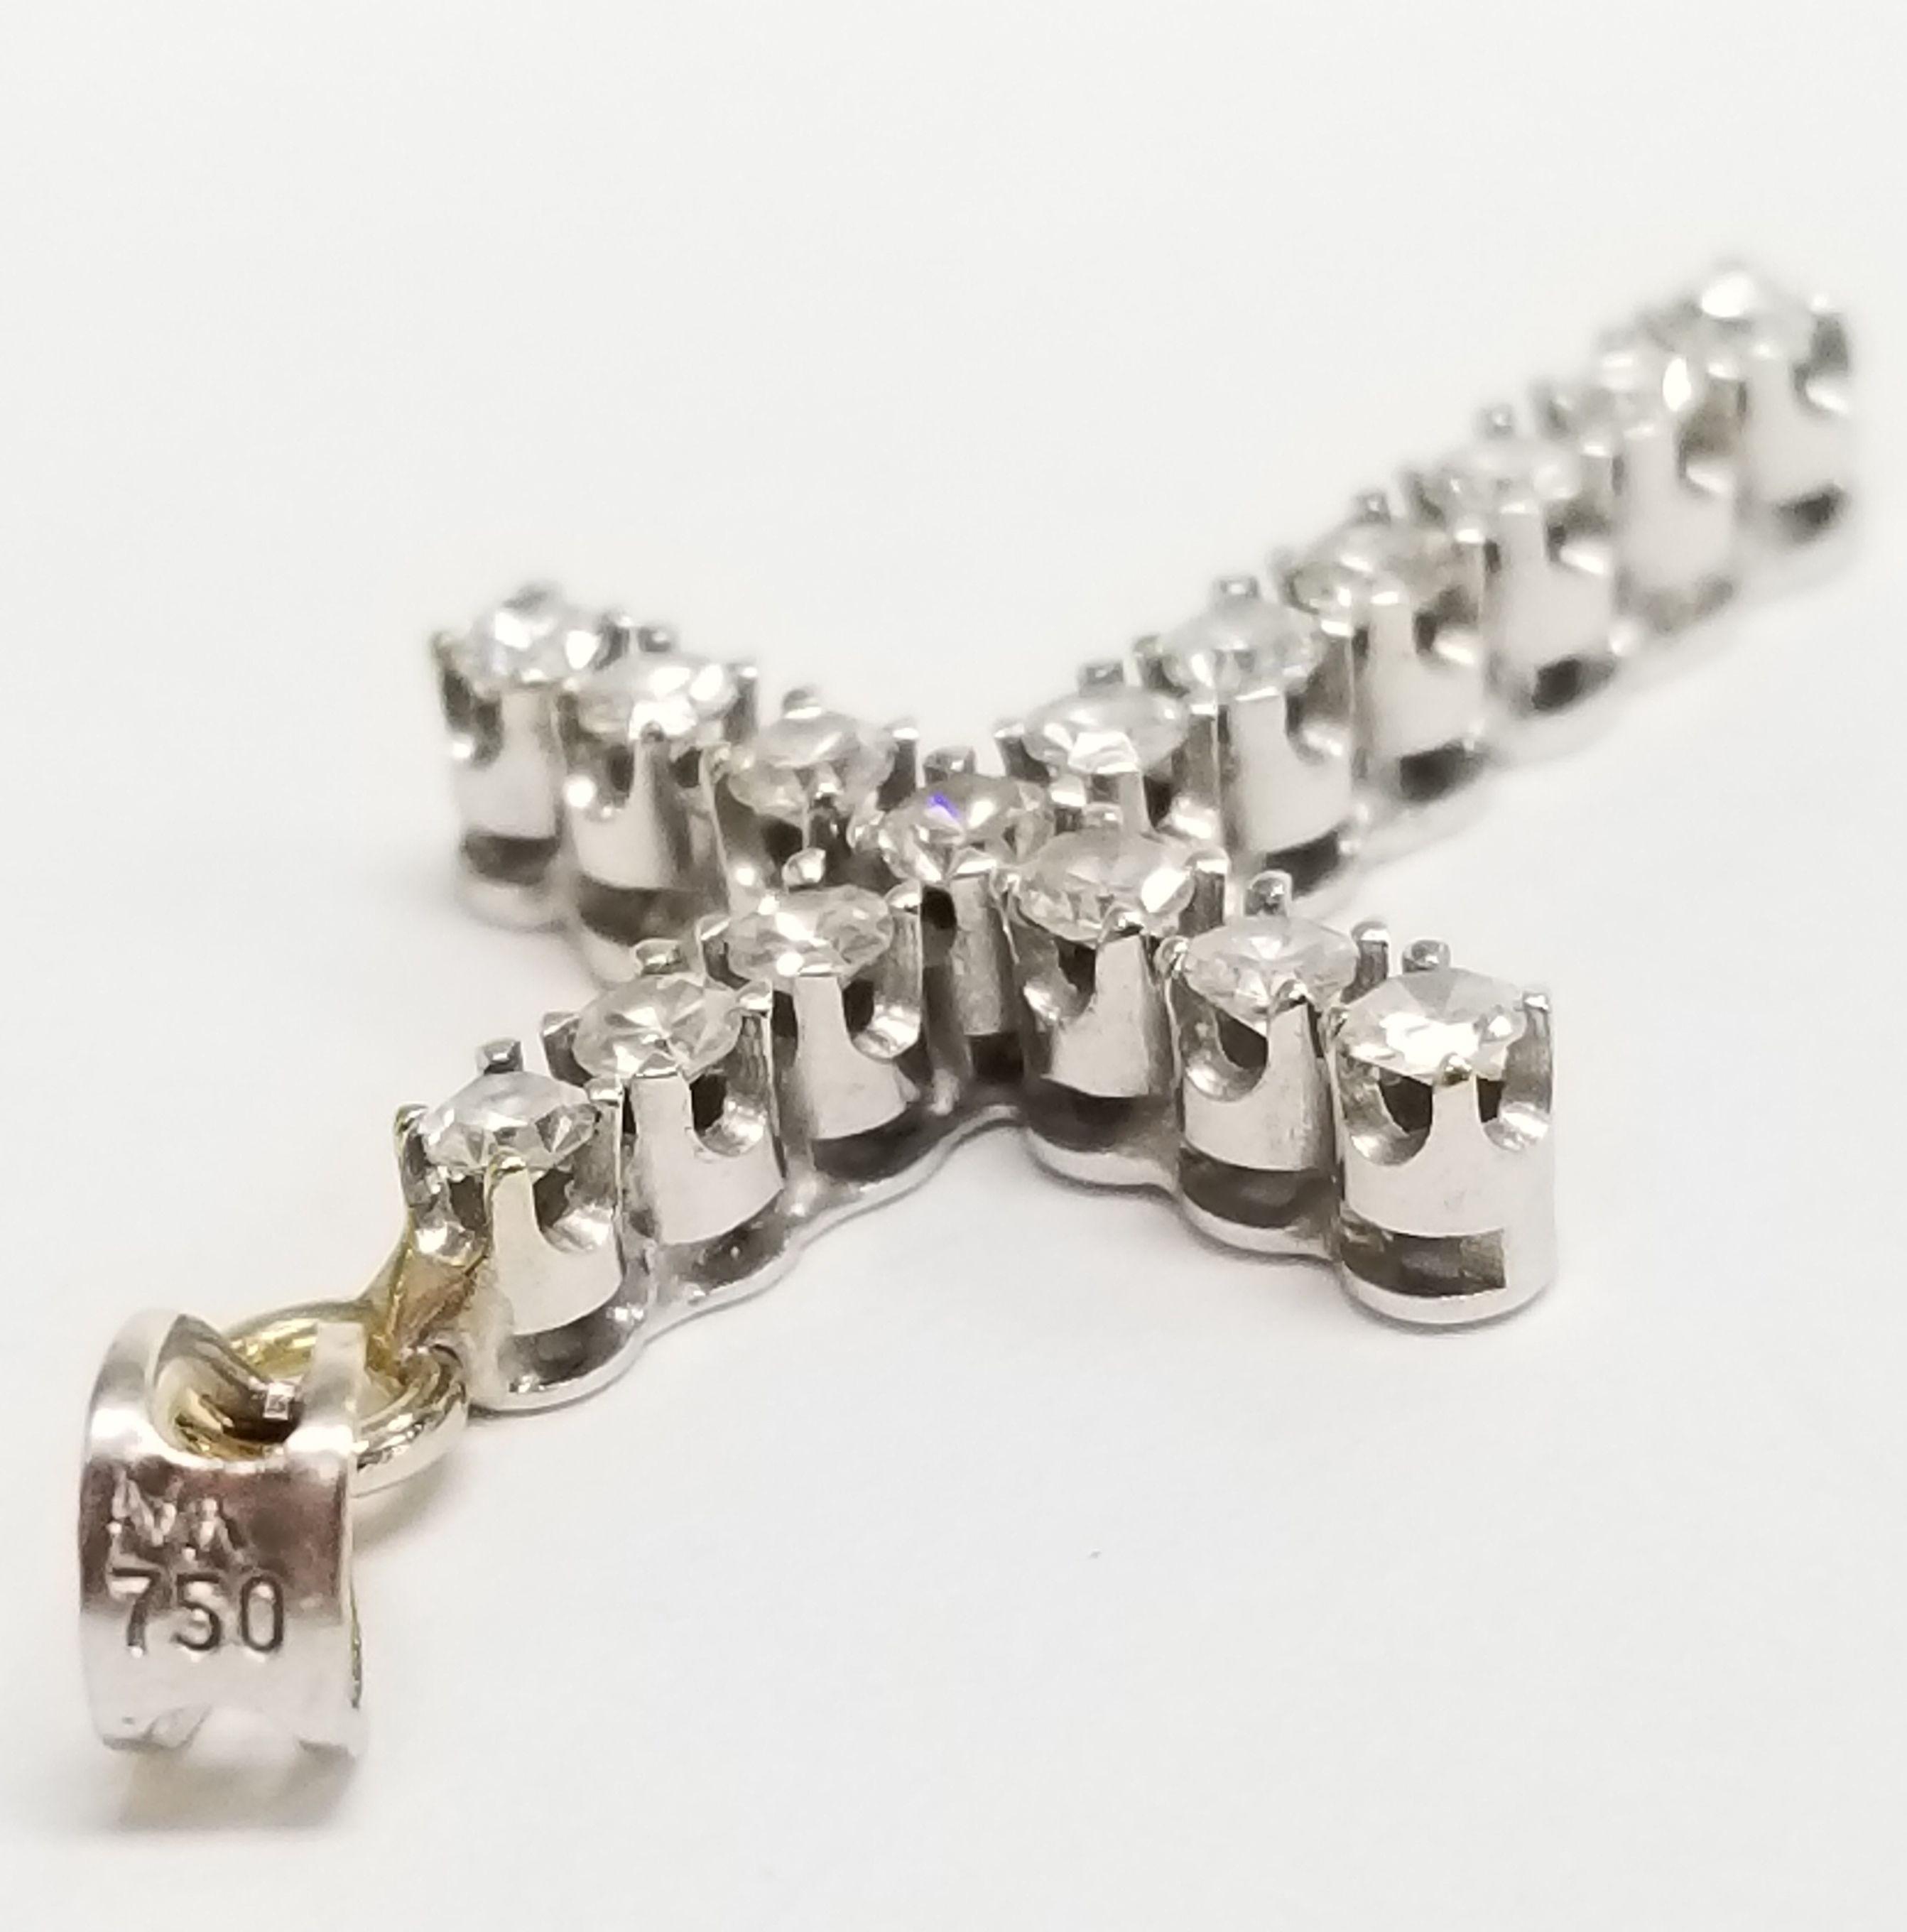 Womens Stamped MK 18k White Gold with 16 Genuine Diamond Cross